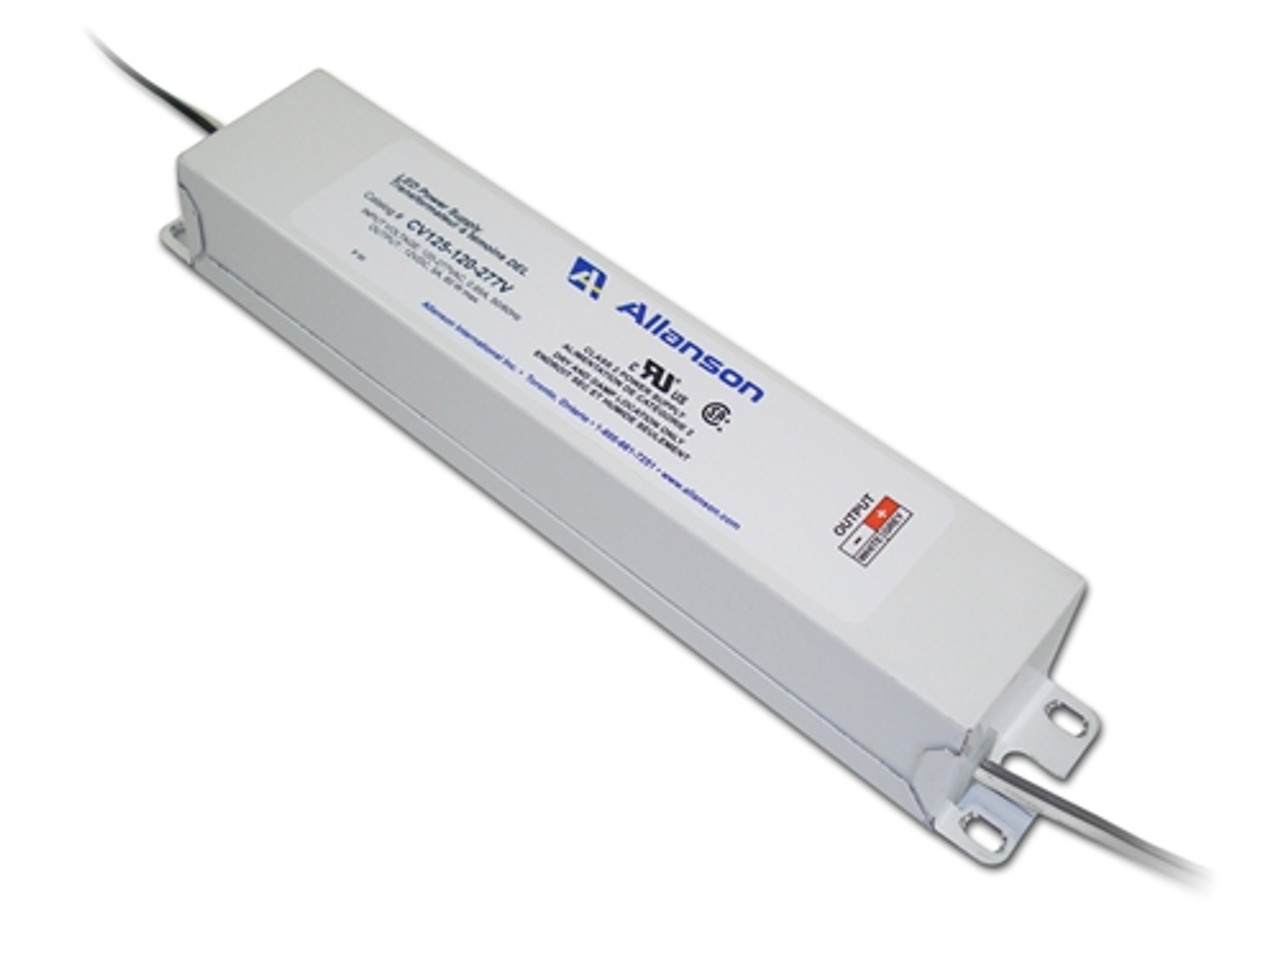 Wall mount LED power supply ALS012012 - 12V